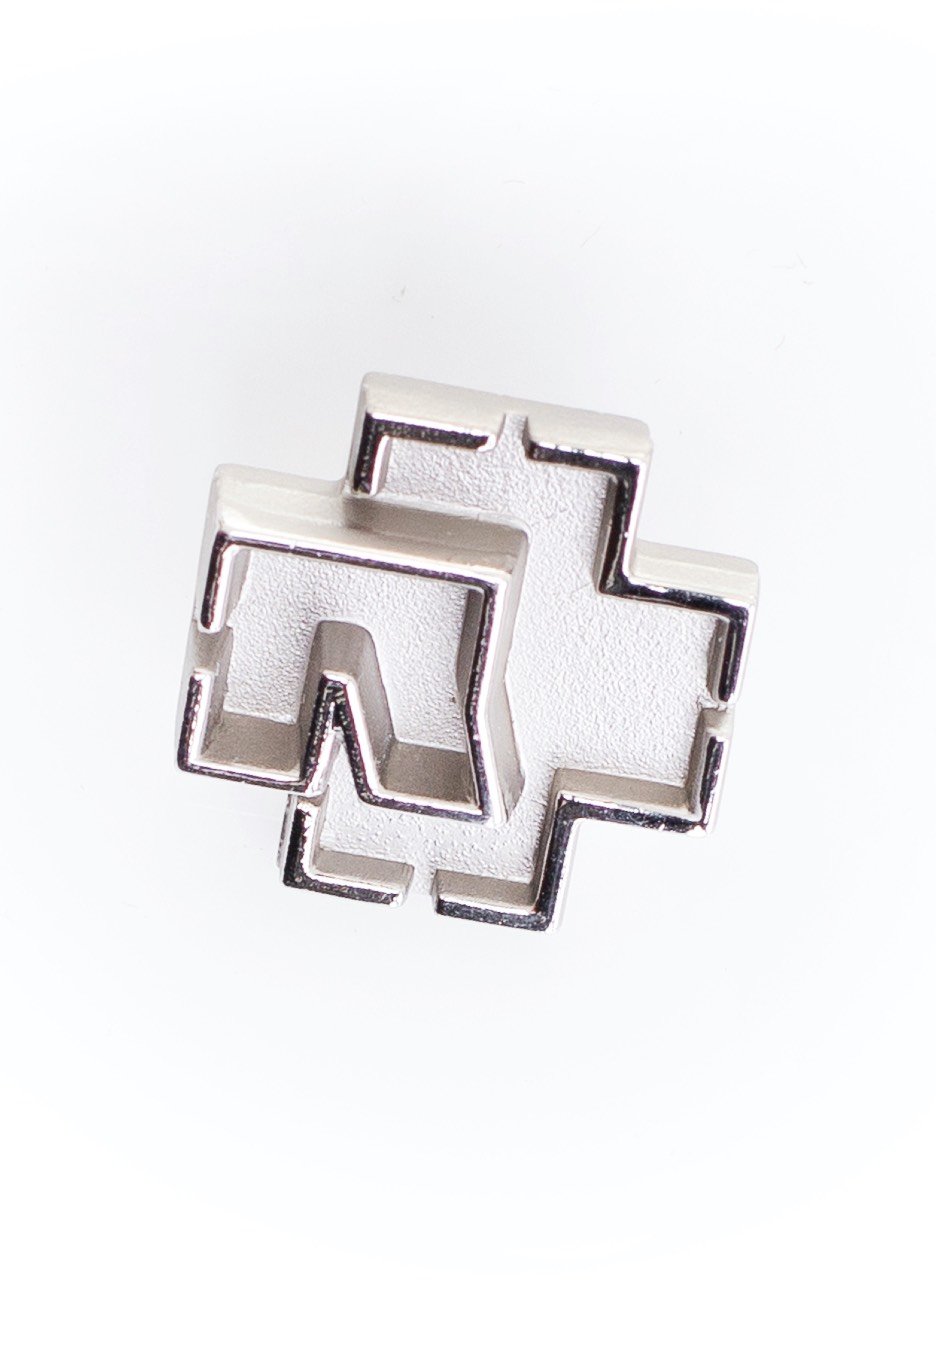 Rammstein - Logo - Pin